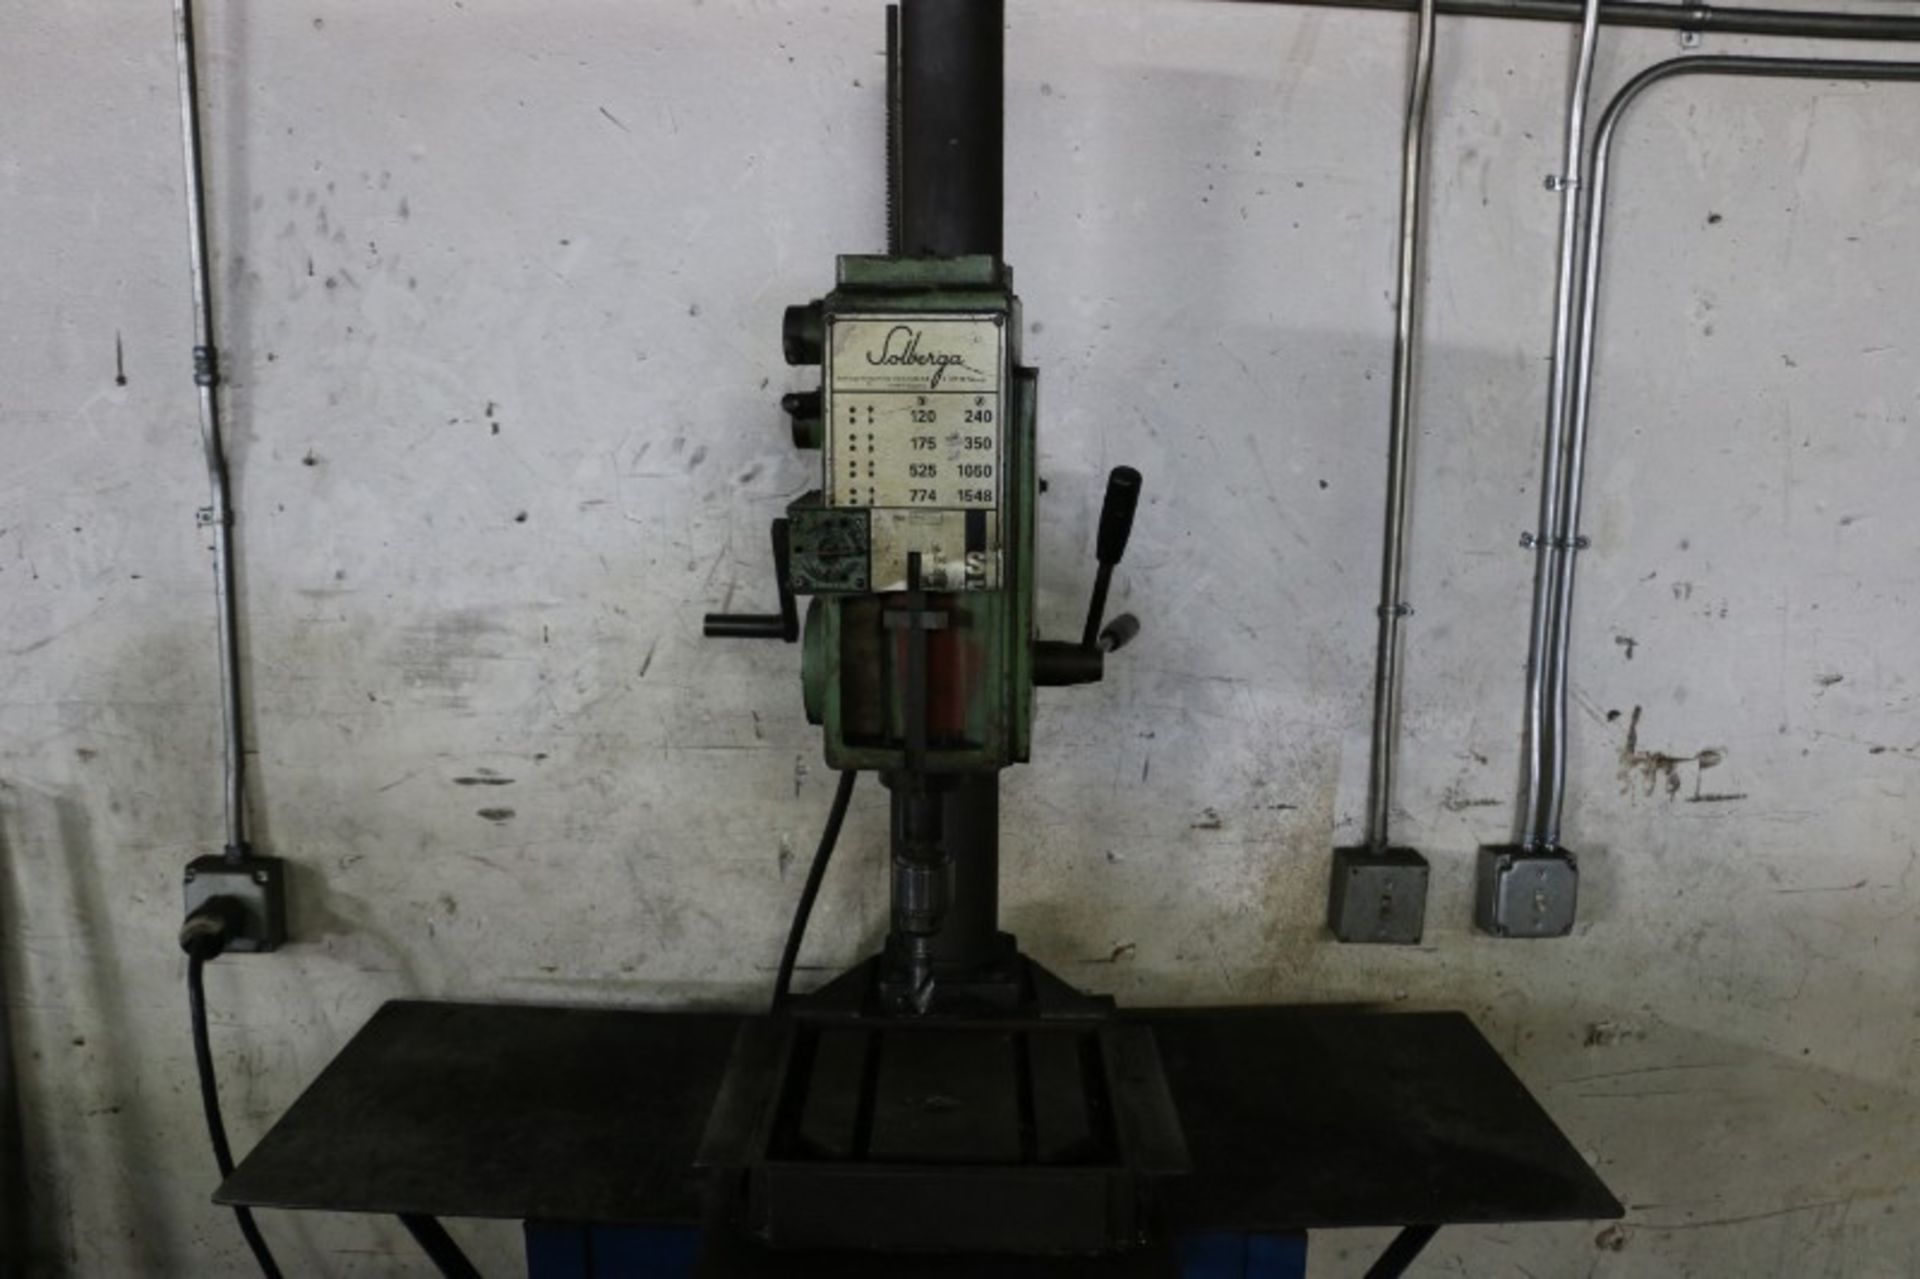 Solberga Manual Drill Press, S/N 3126